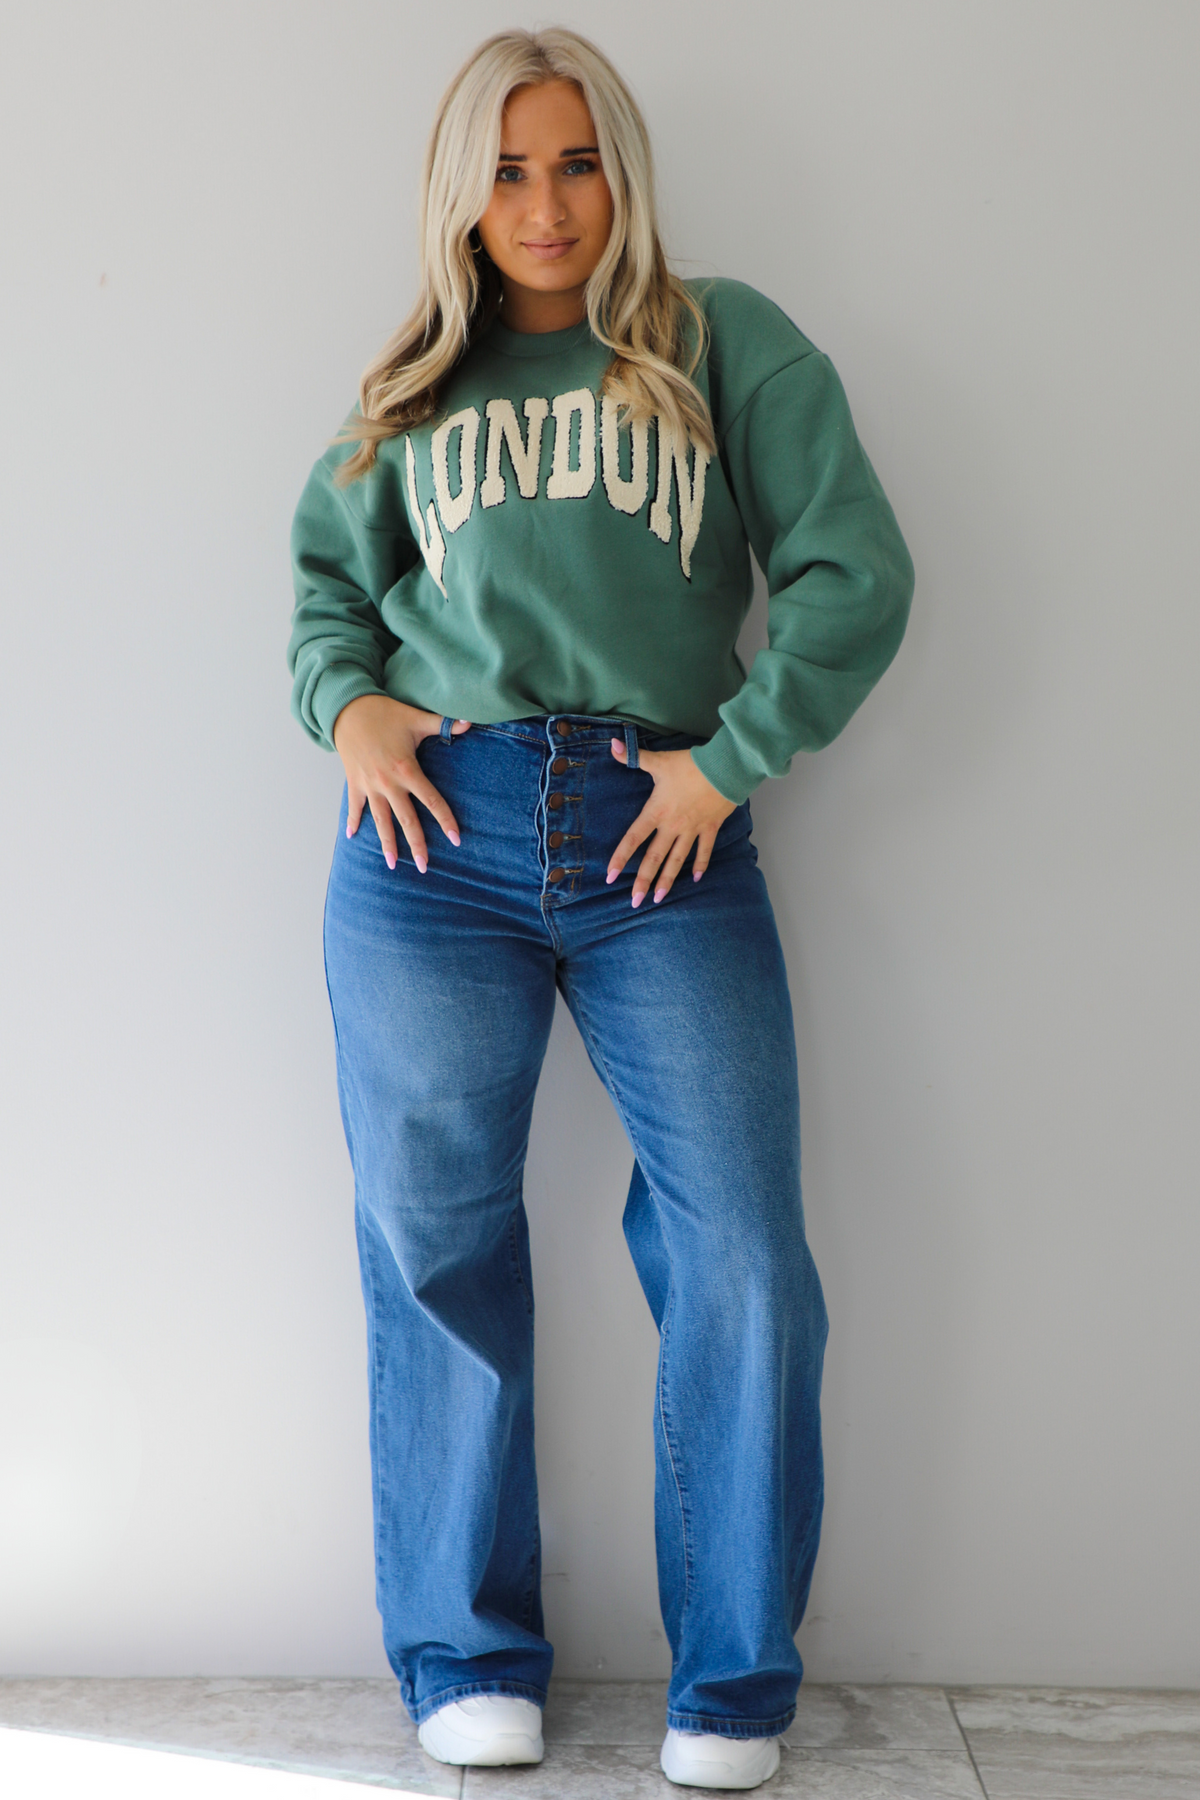 Boulce Letter Patch Sweater: Emerald/Multi